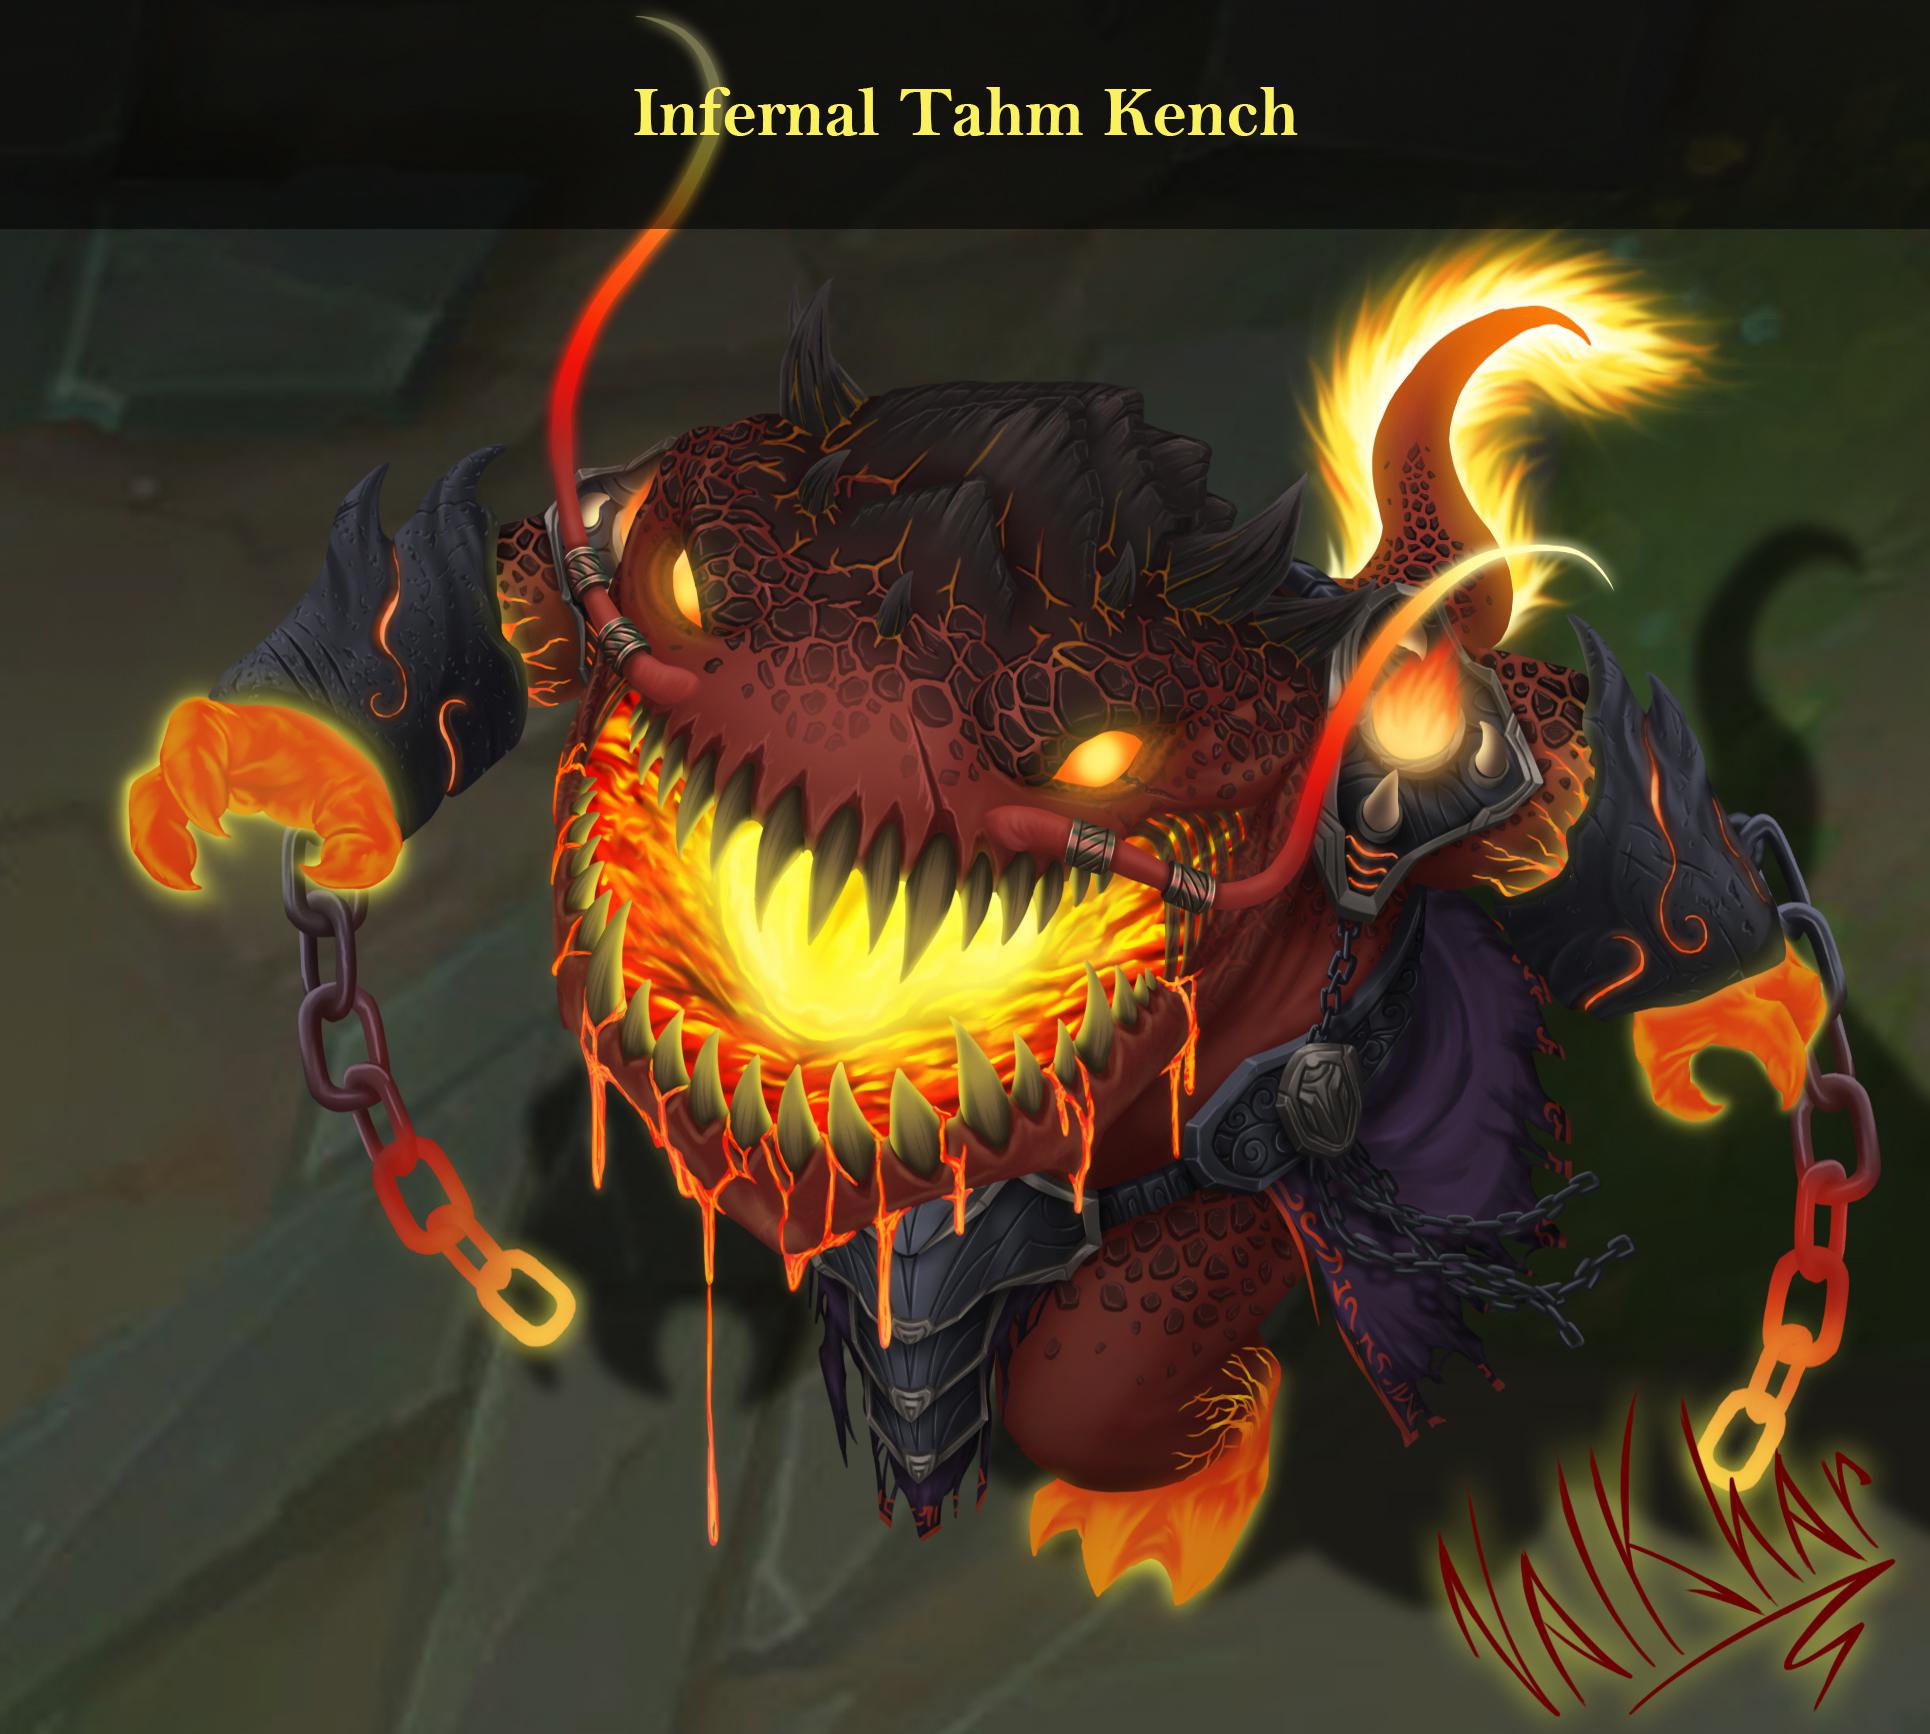 Artist shows off molten hot Infernal Tahm Kench skin concept.